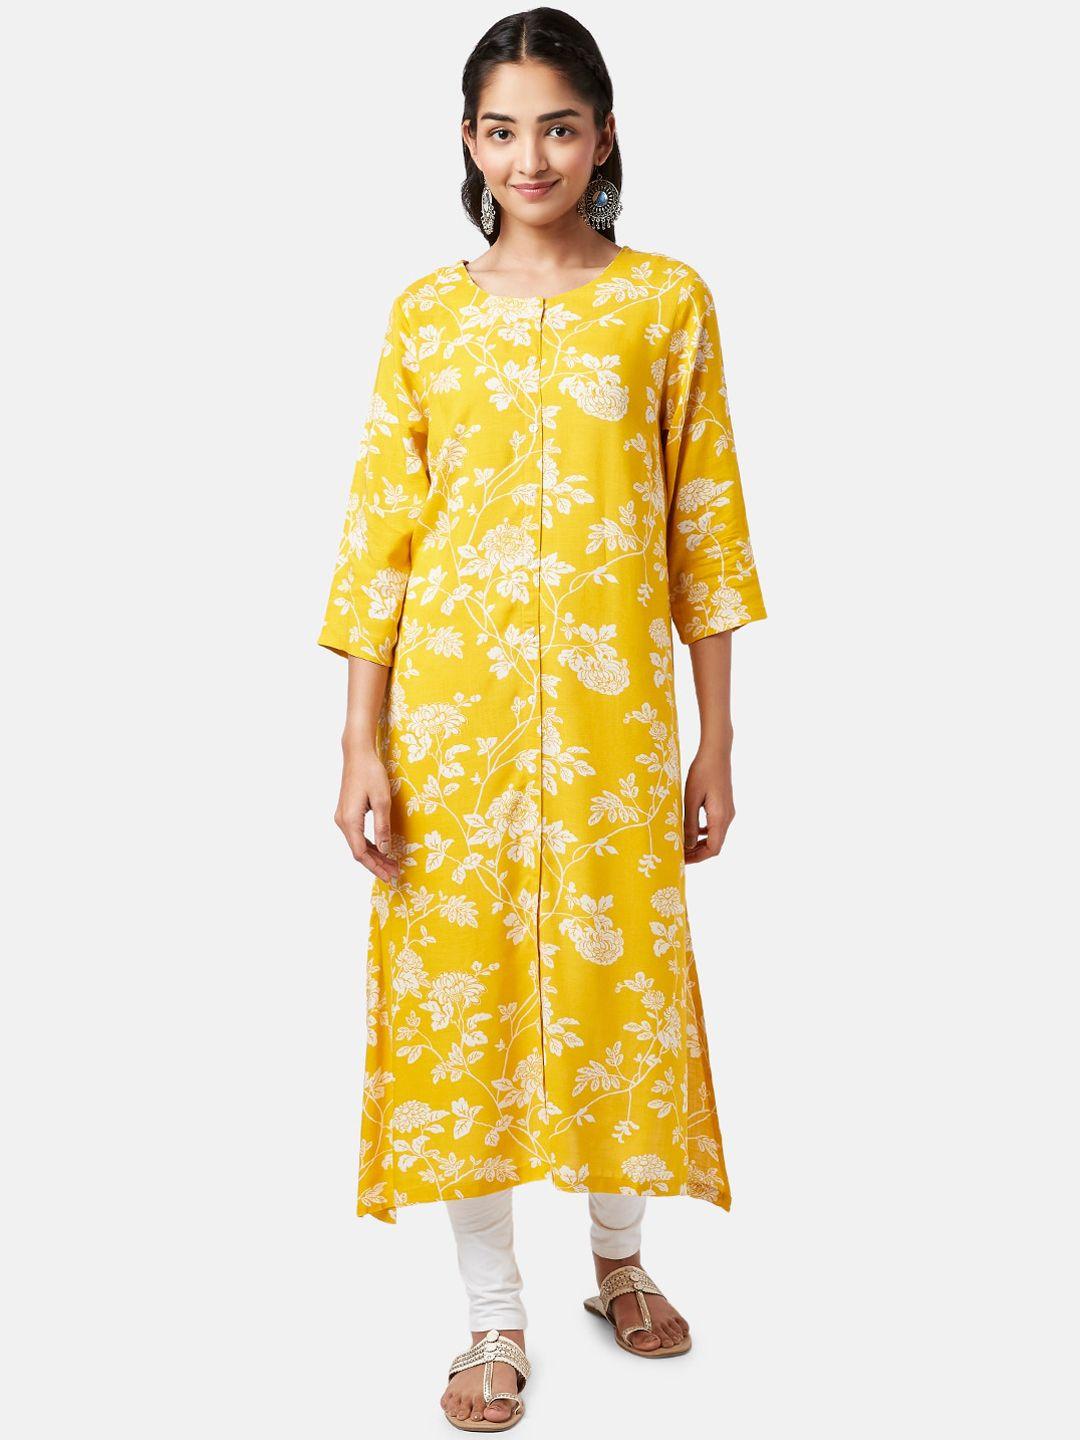 yu by pantaloons women yellow floral printed kurta